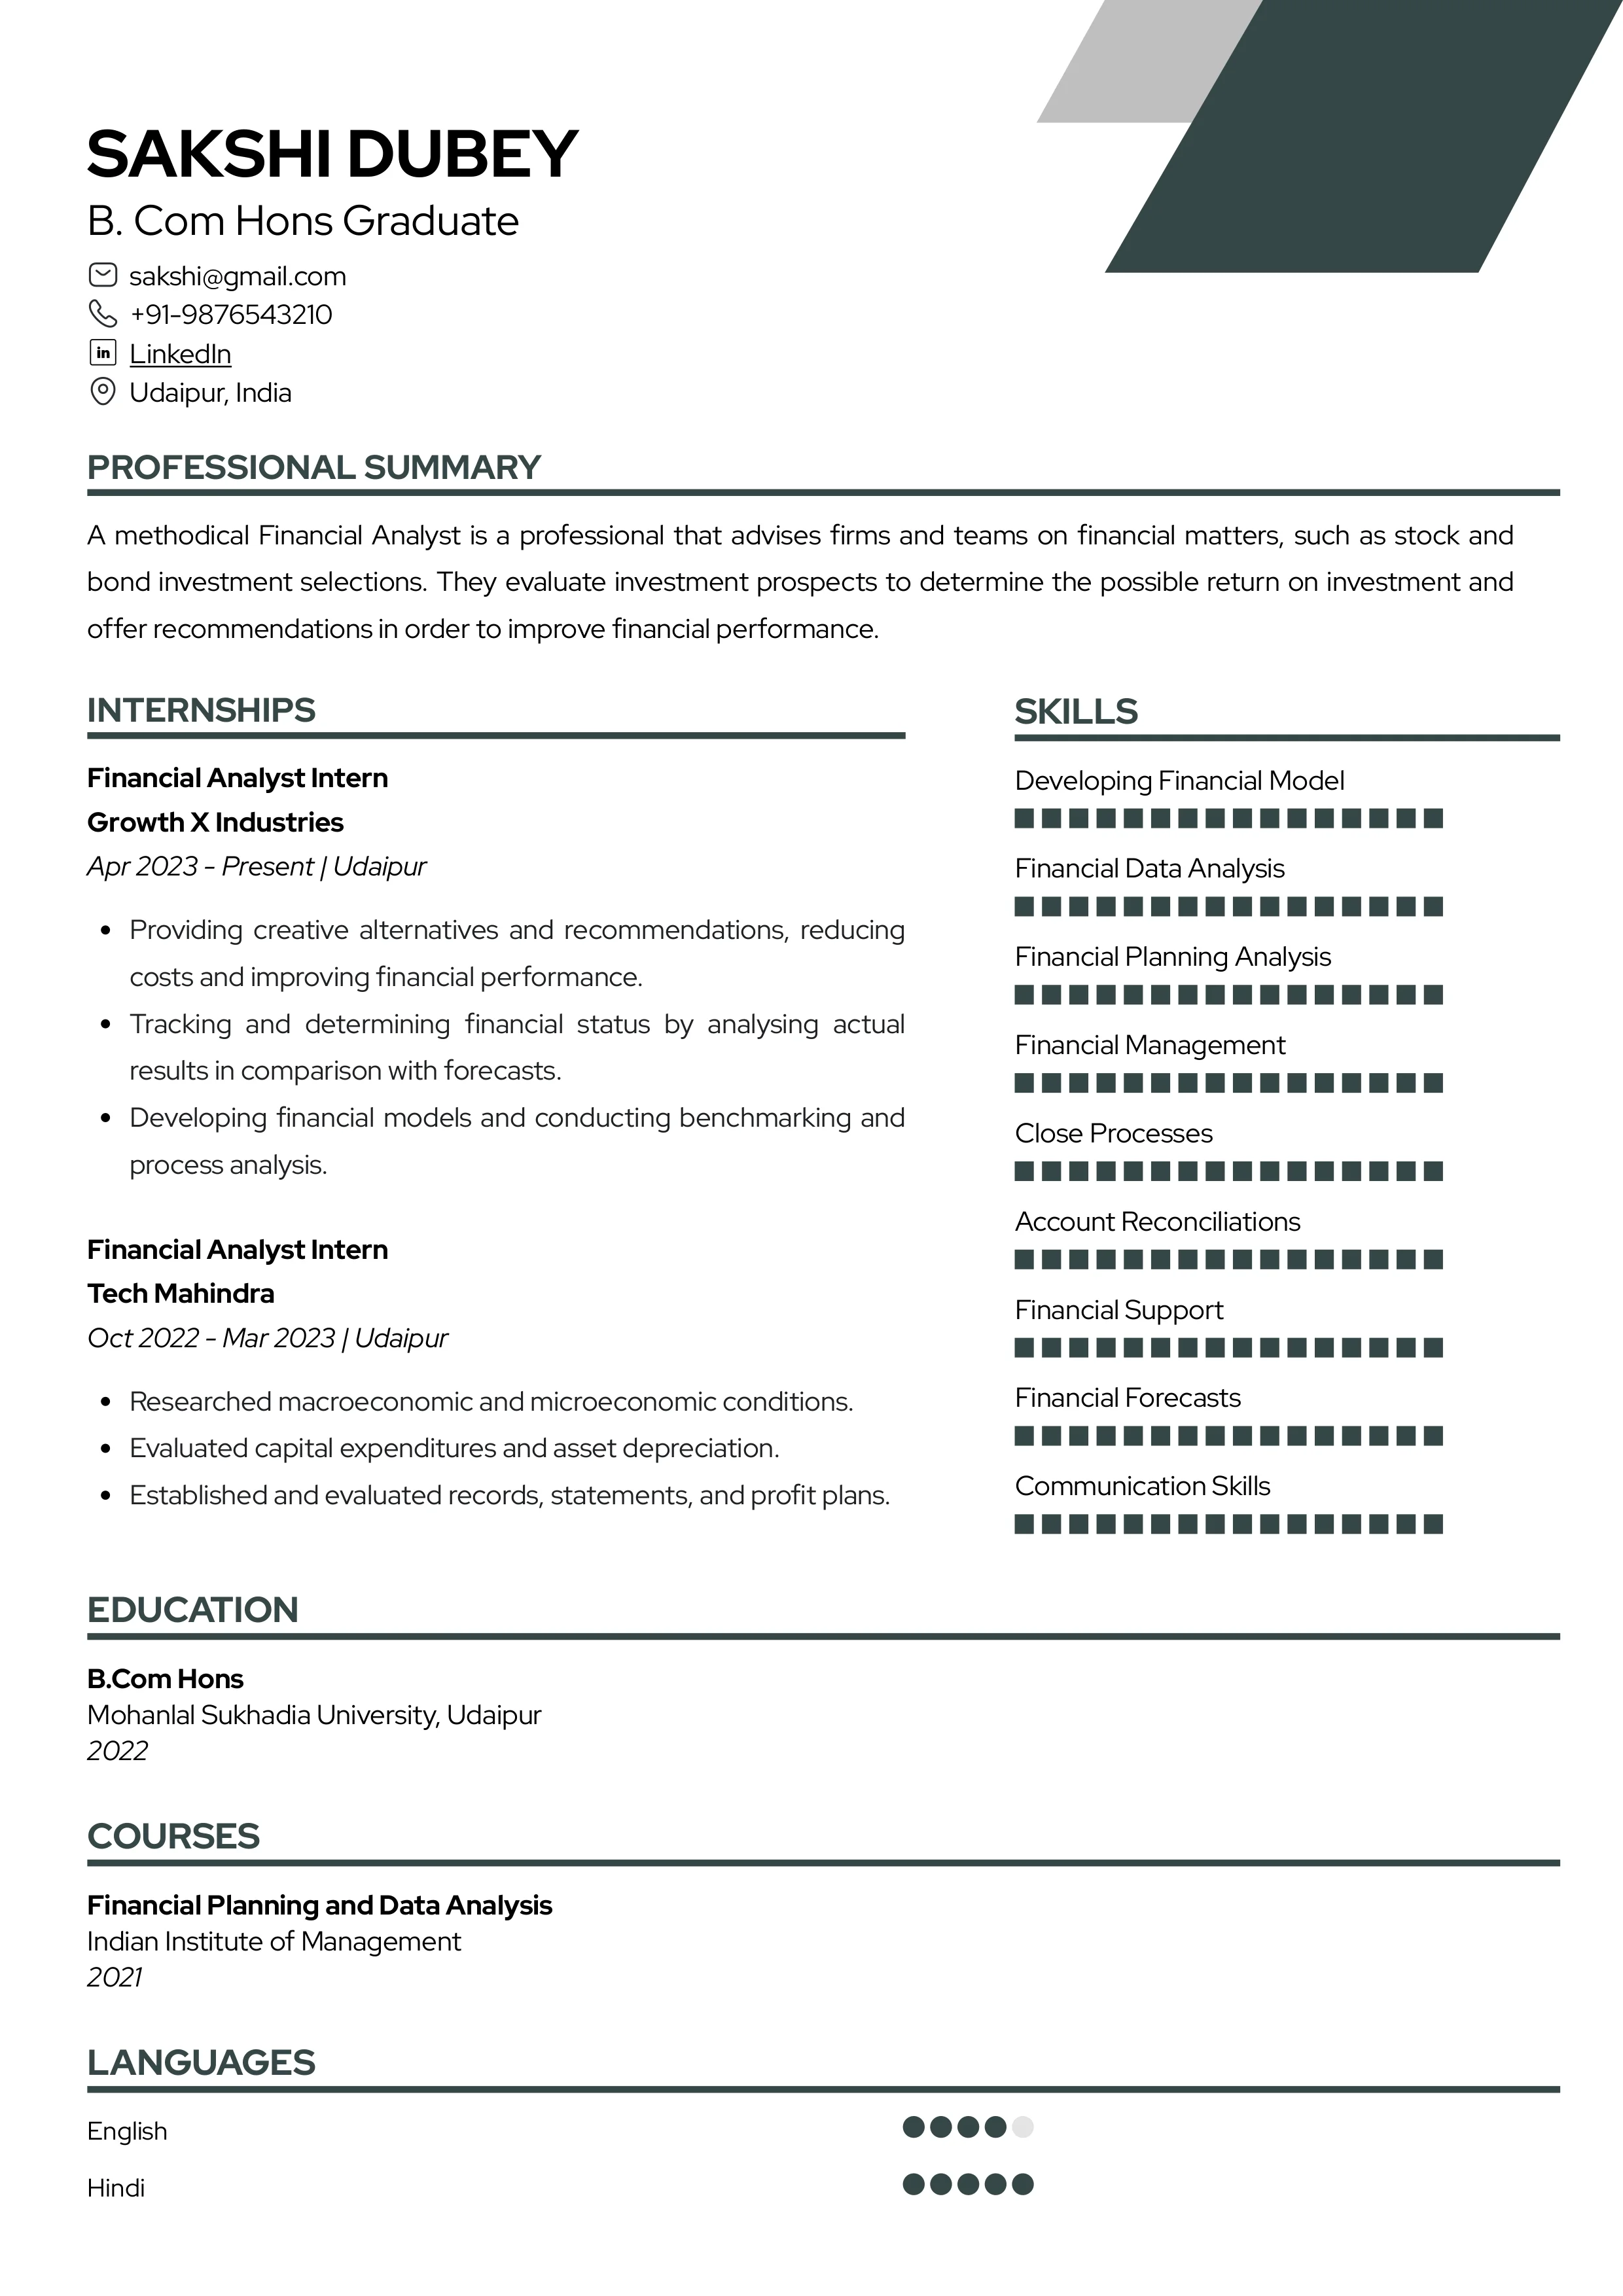 Sample Resume of B.Com (Hons) Graduate | Free Resume Templates & Samples on Resumod.co